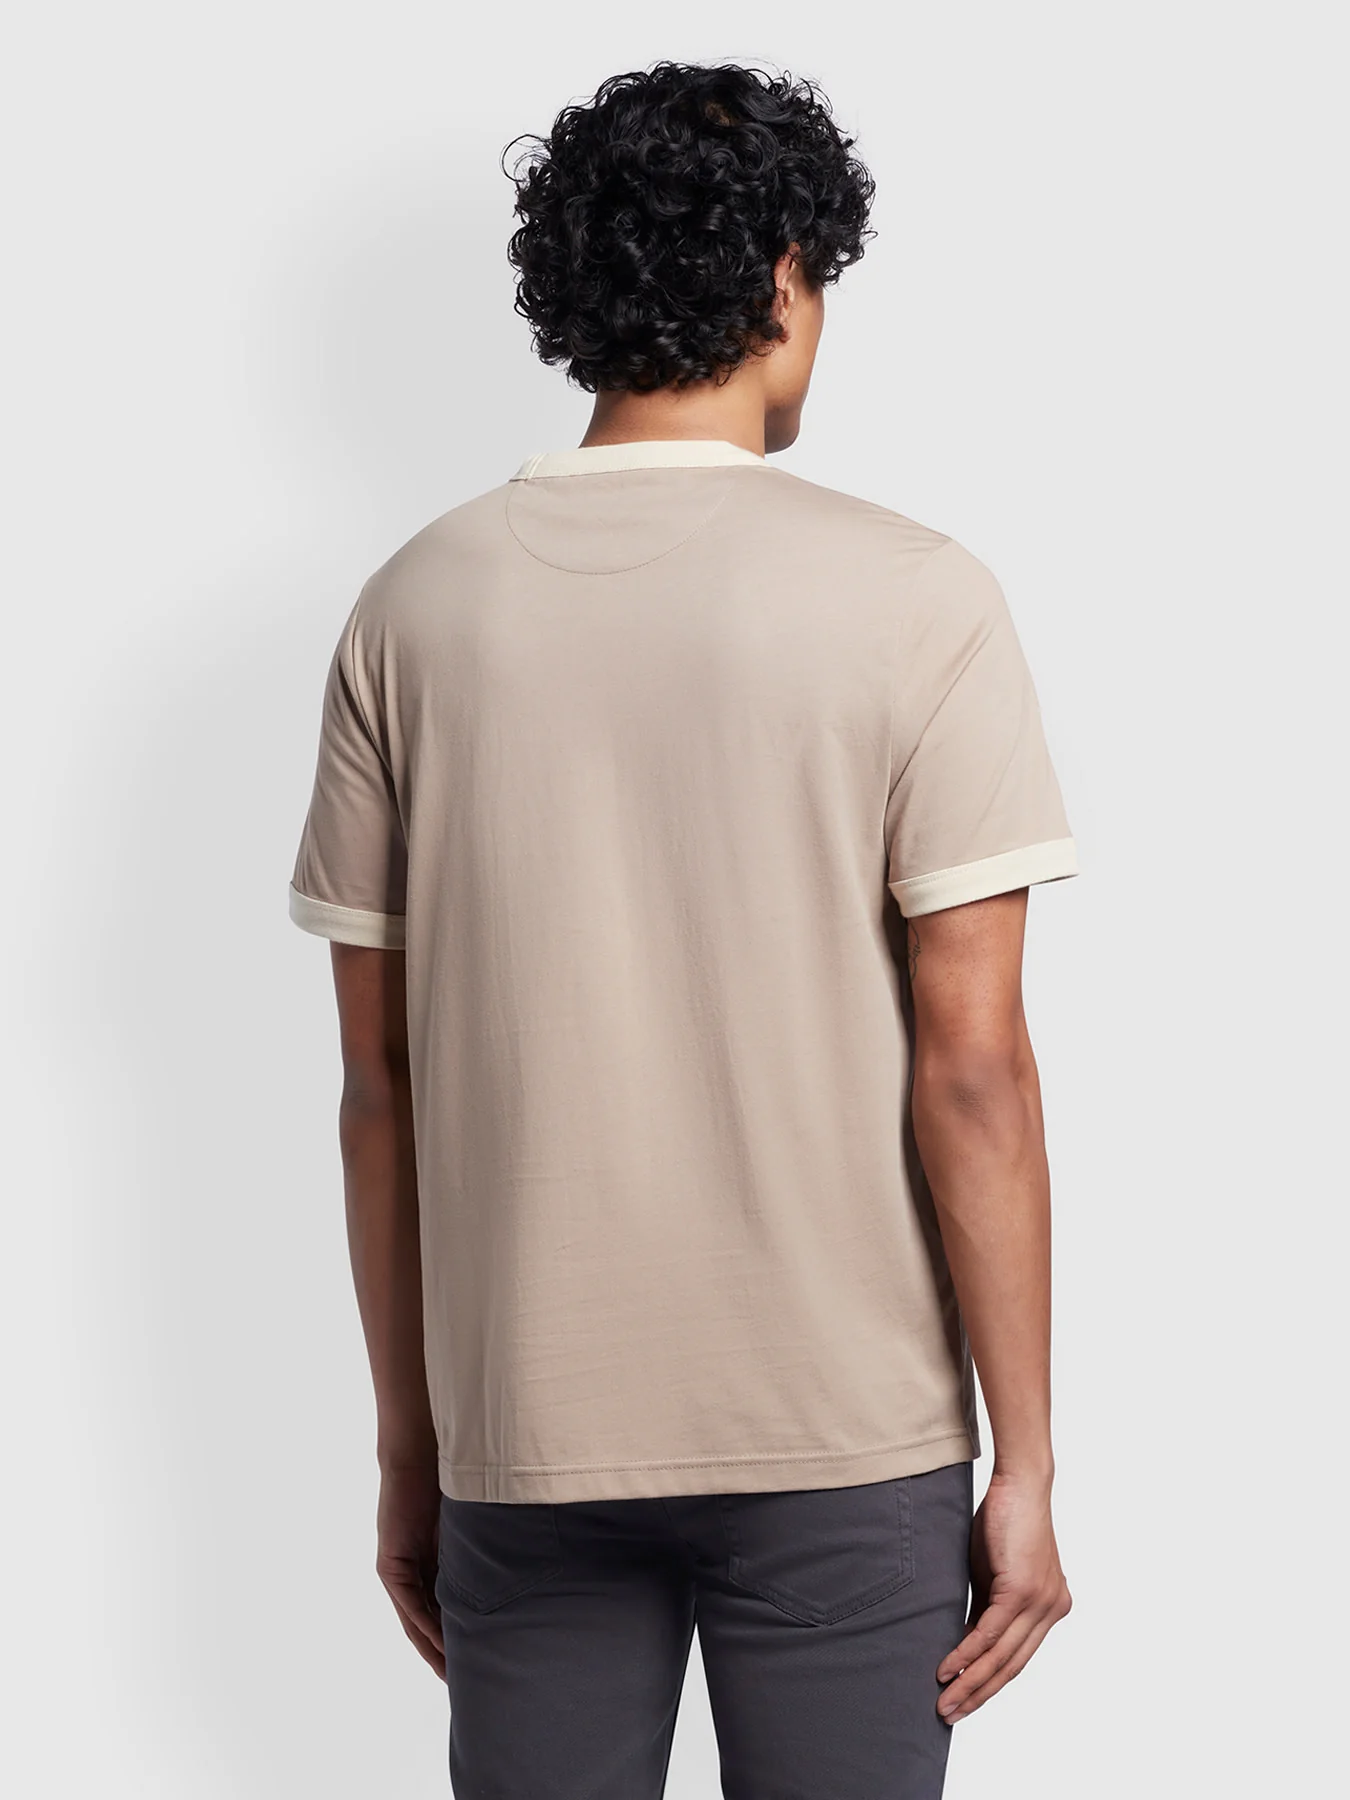 Farah Clive Regular Fit Print T-Shirt In Smoky Brown 